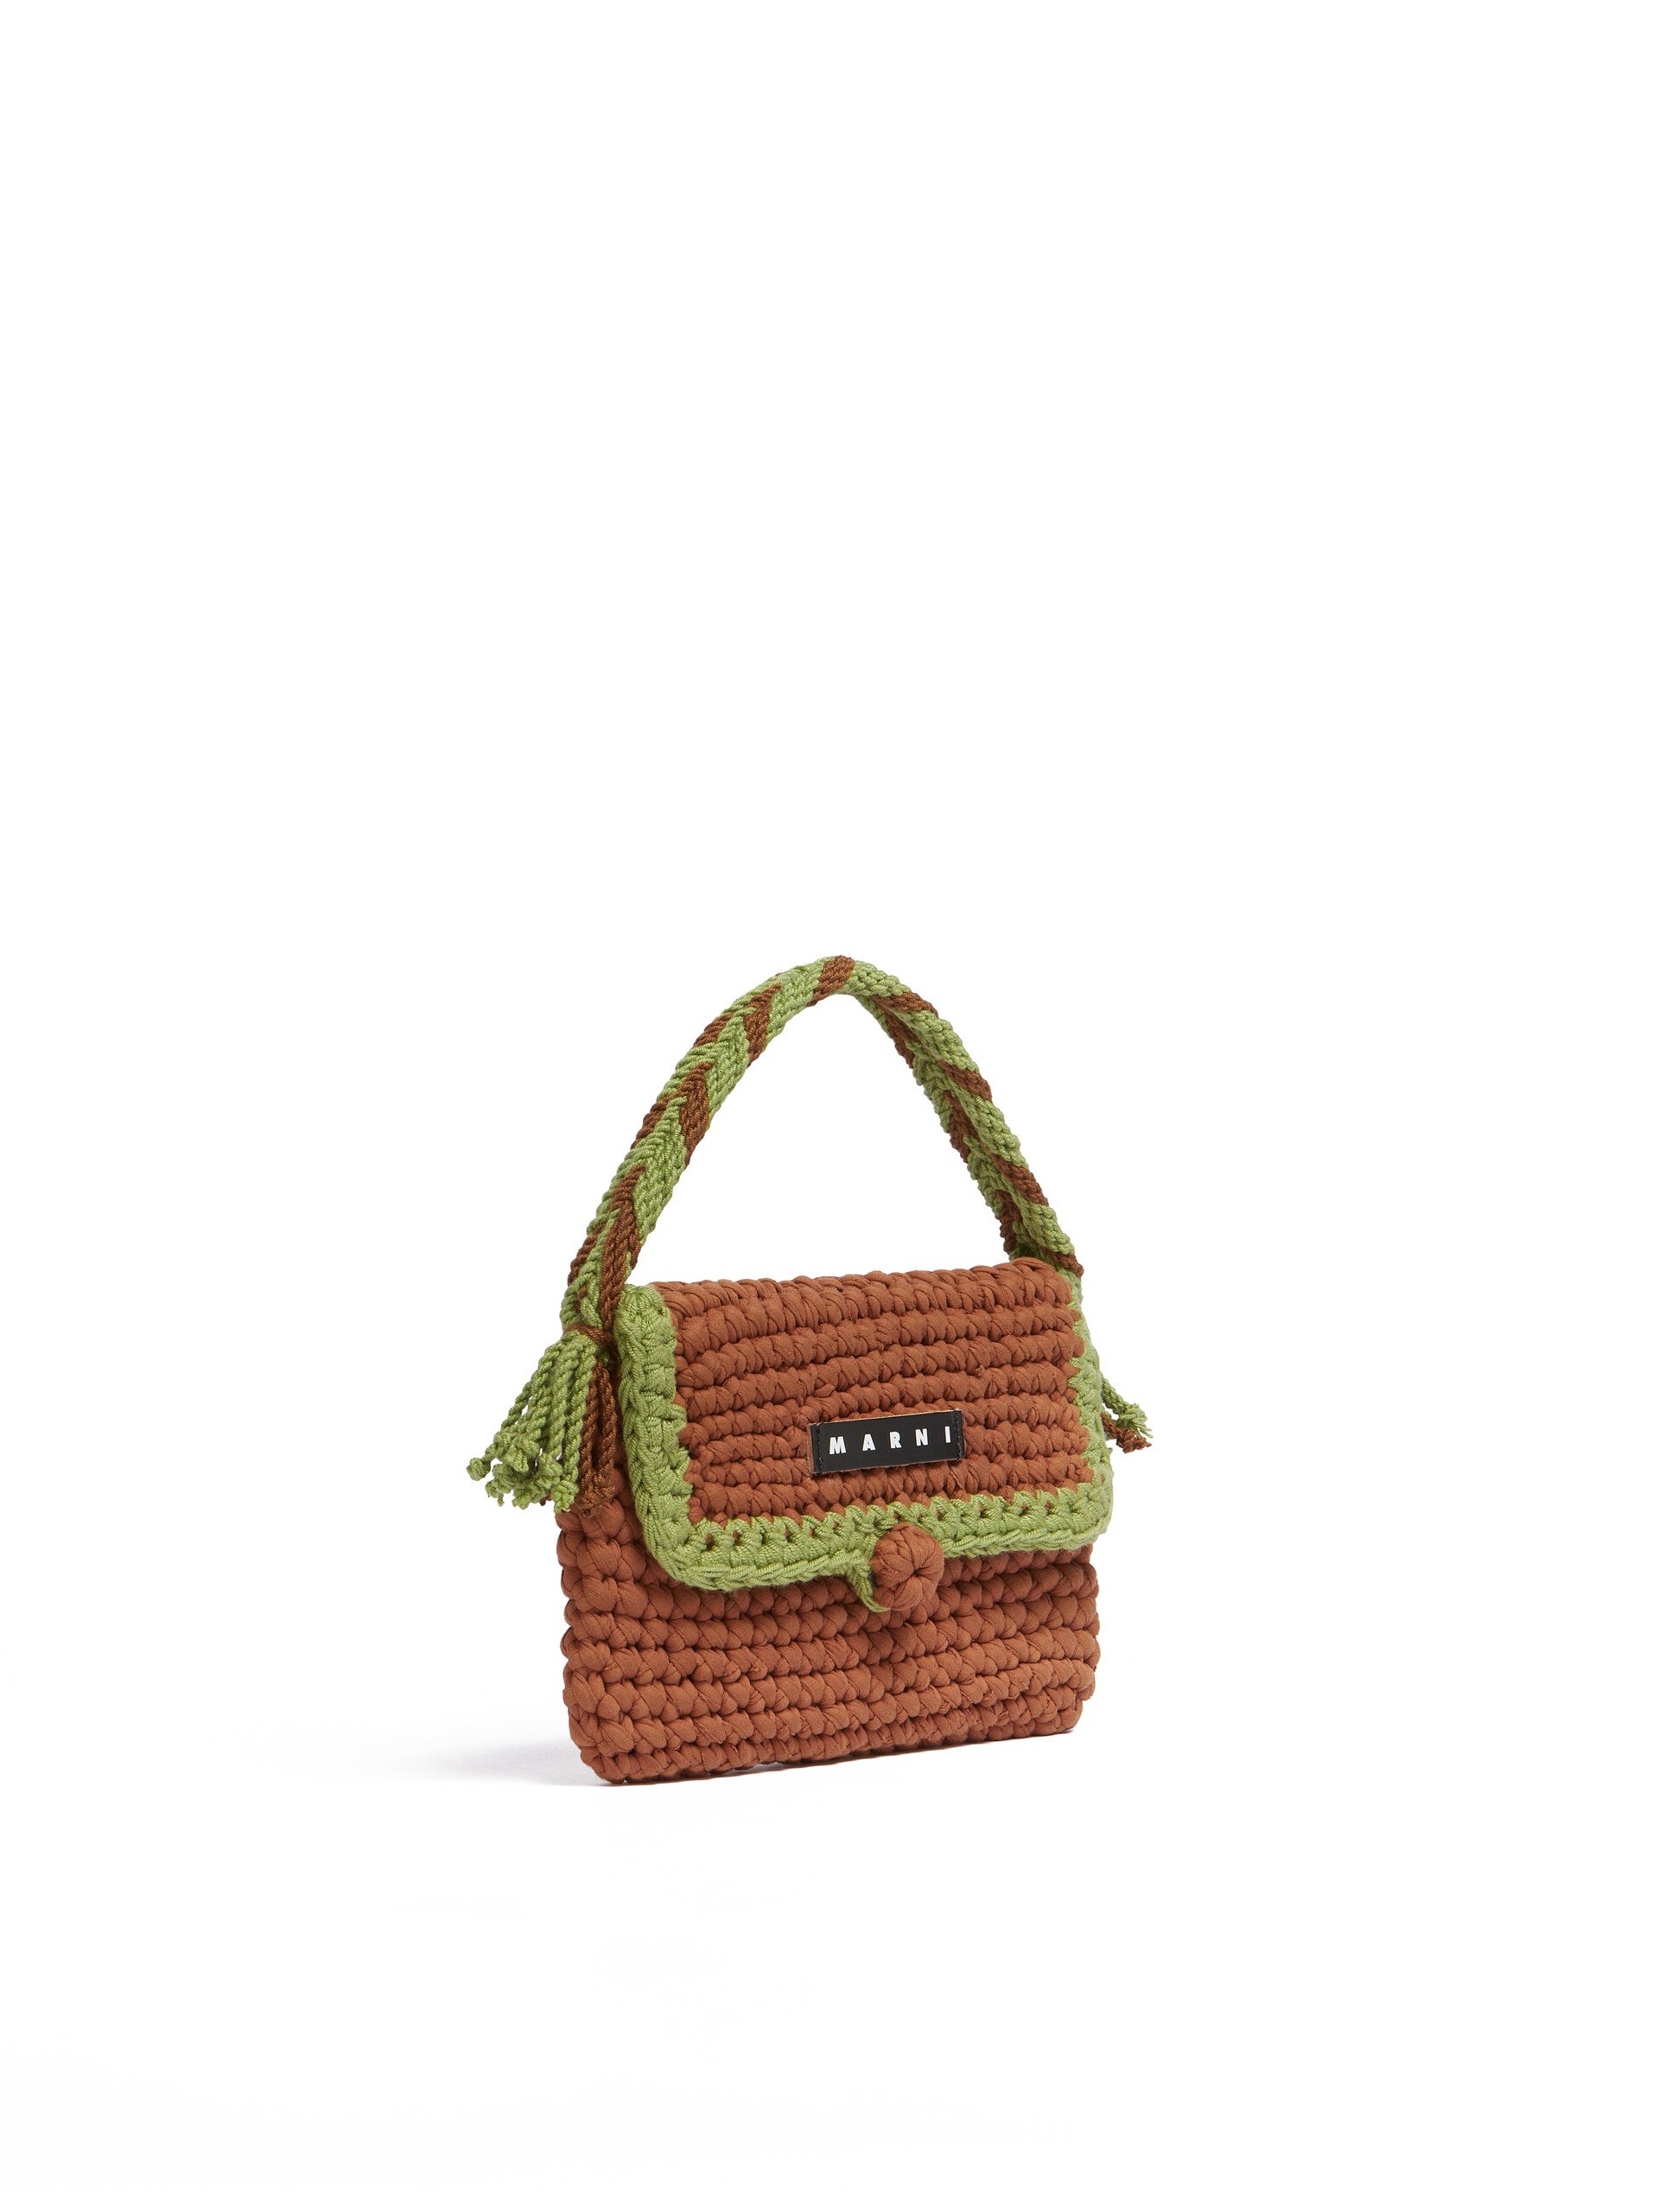 Blue Crochet Marni Market Bread Handbag - Shopping Bags - Image 2